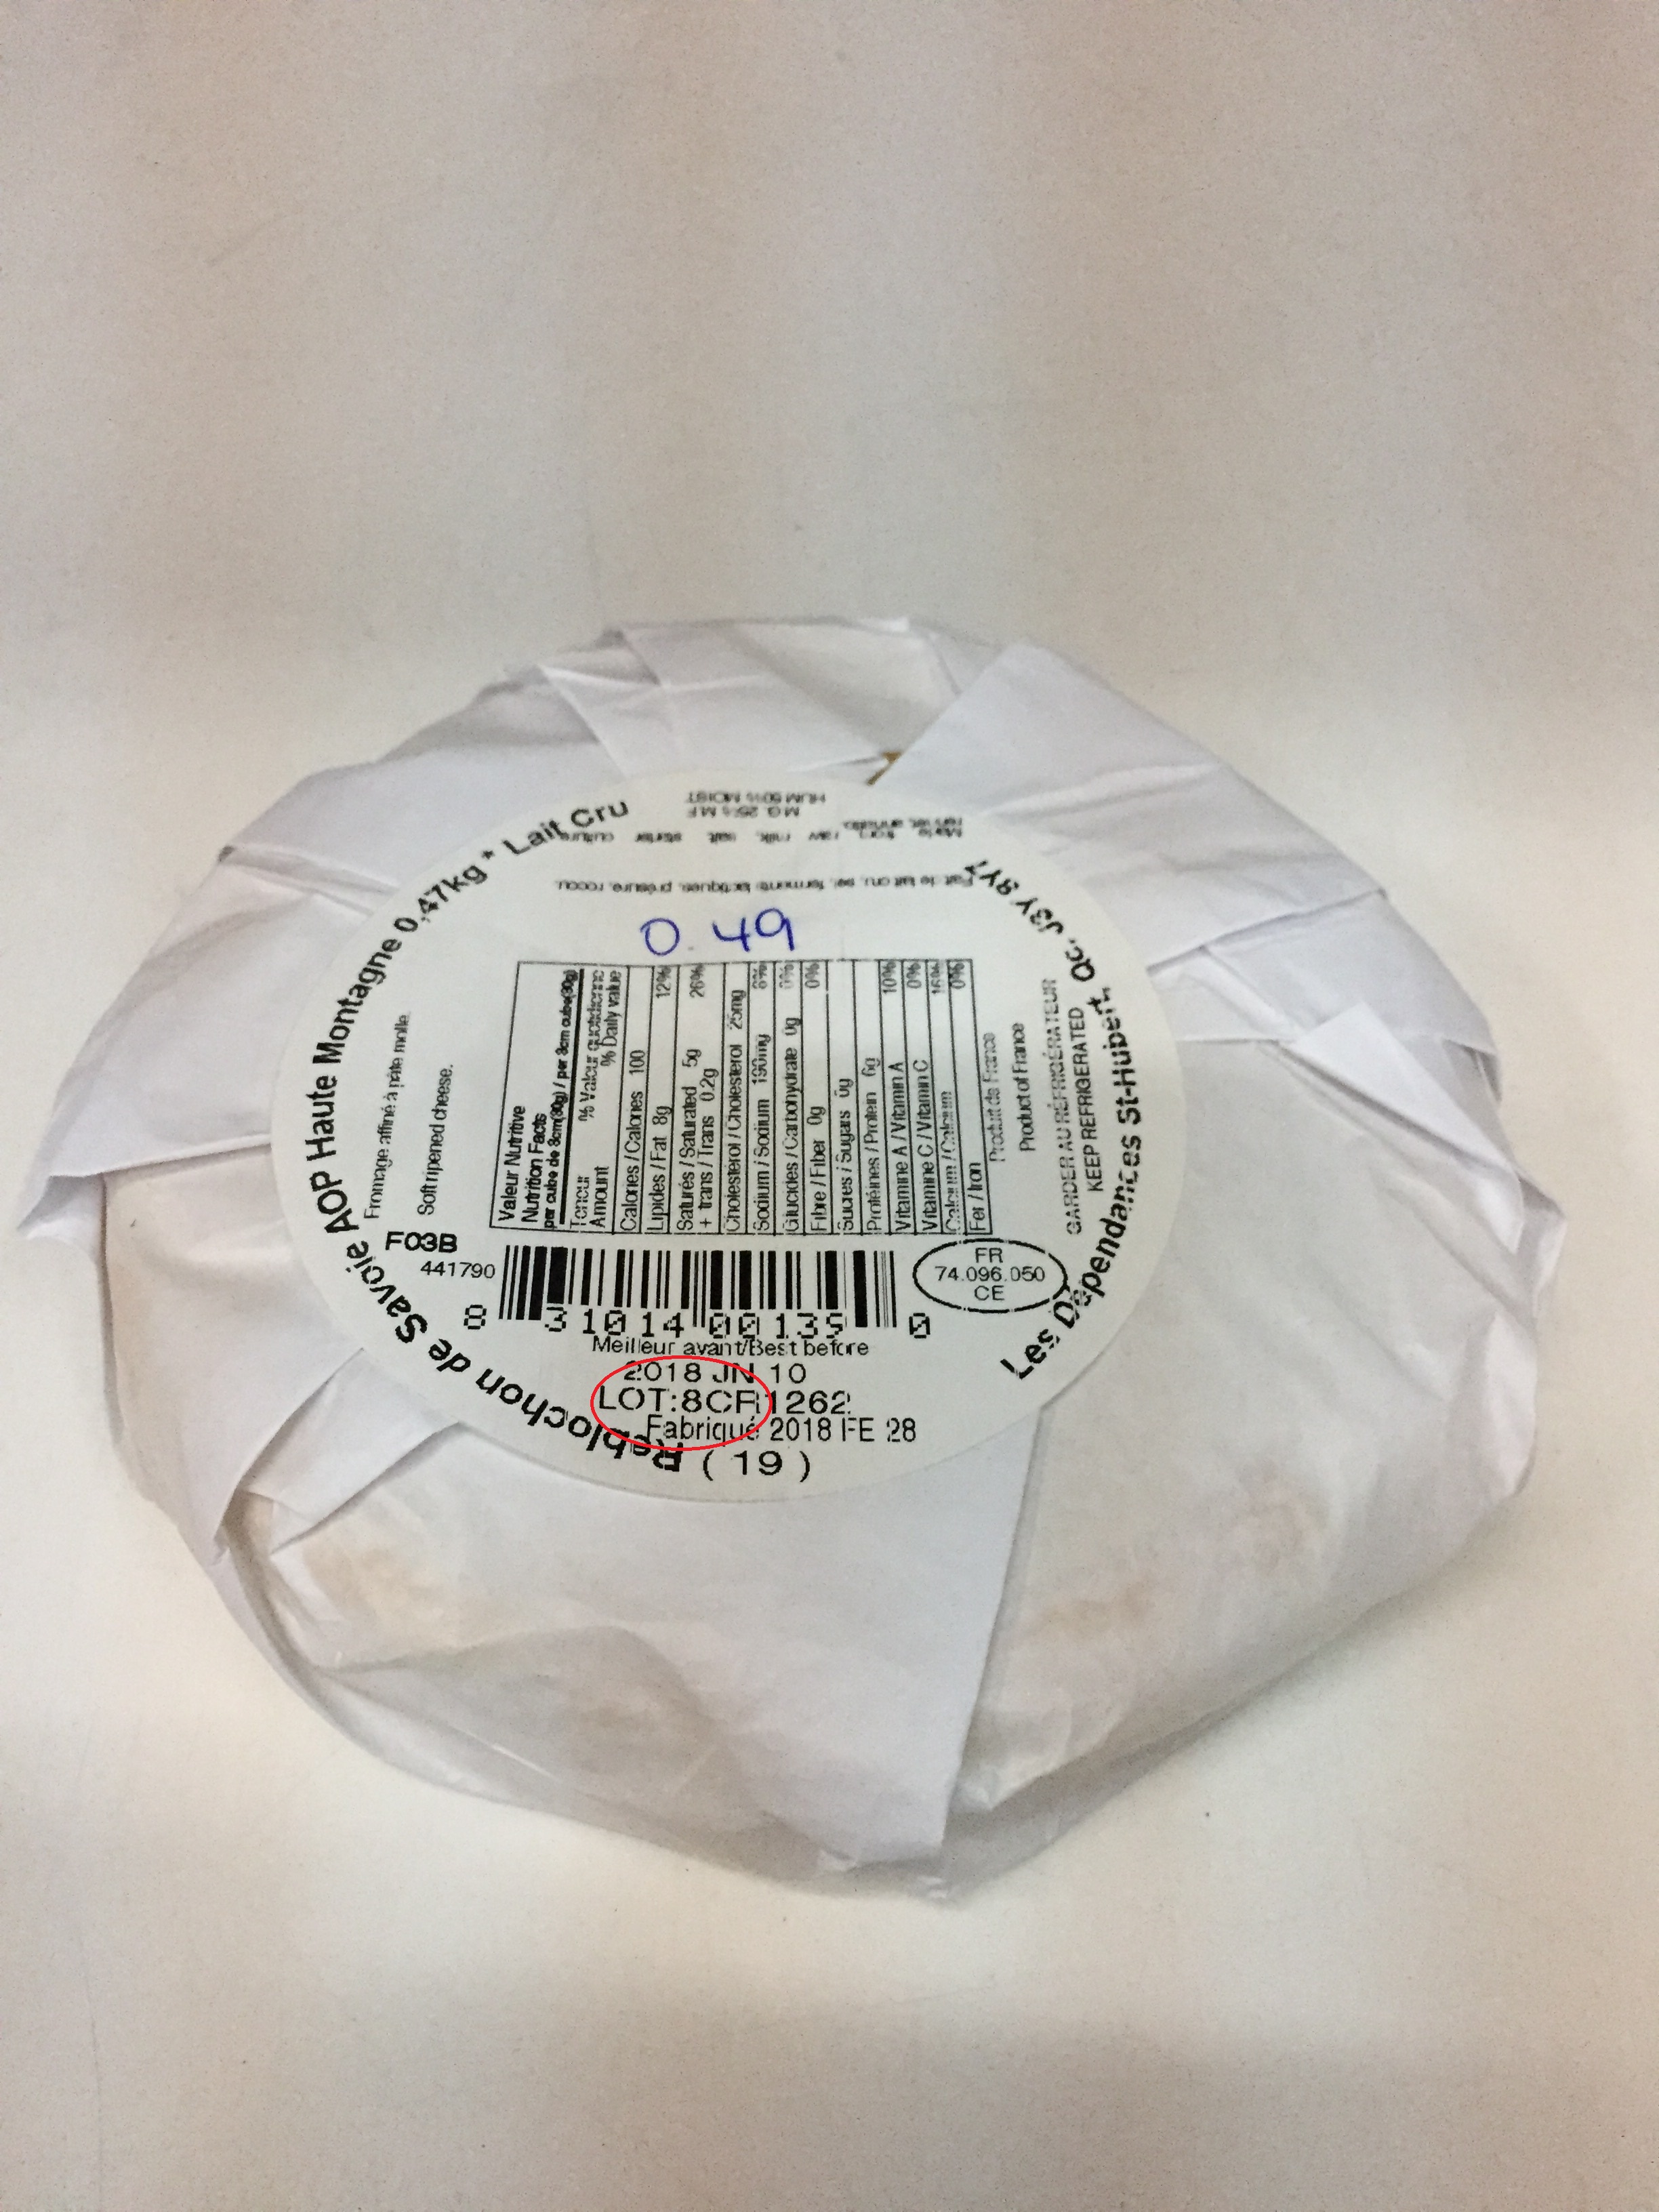 Haute Montagne brand raw milk cheese Reblochon de Savoie (AOP) au lait cru - lots starting with 8CR